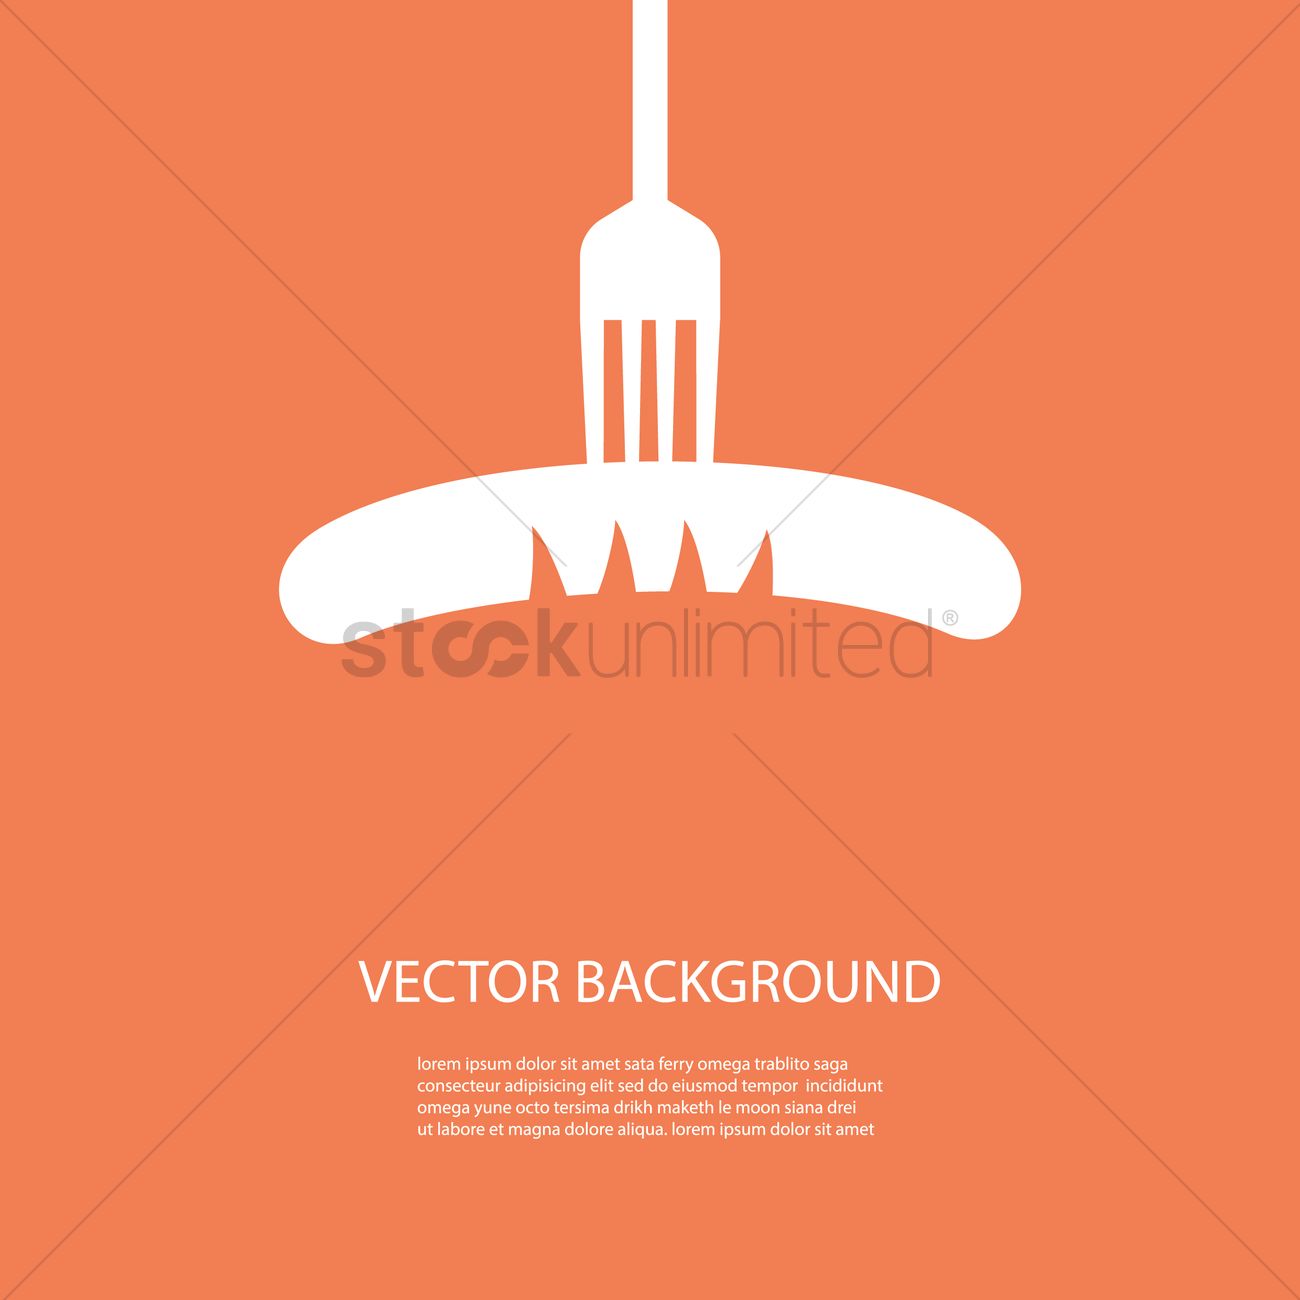 Fork With Sausage Background Design Vector Image